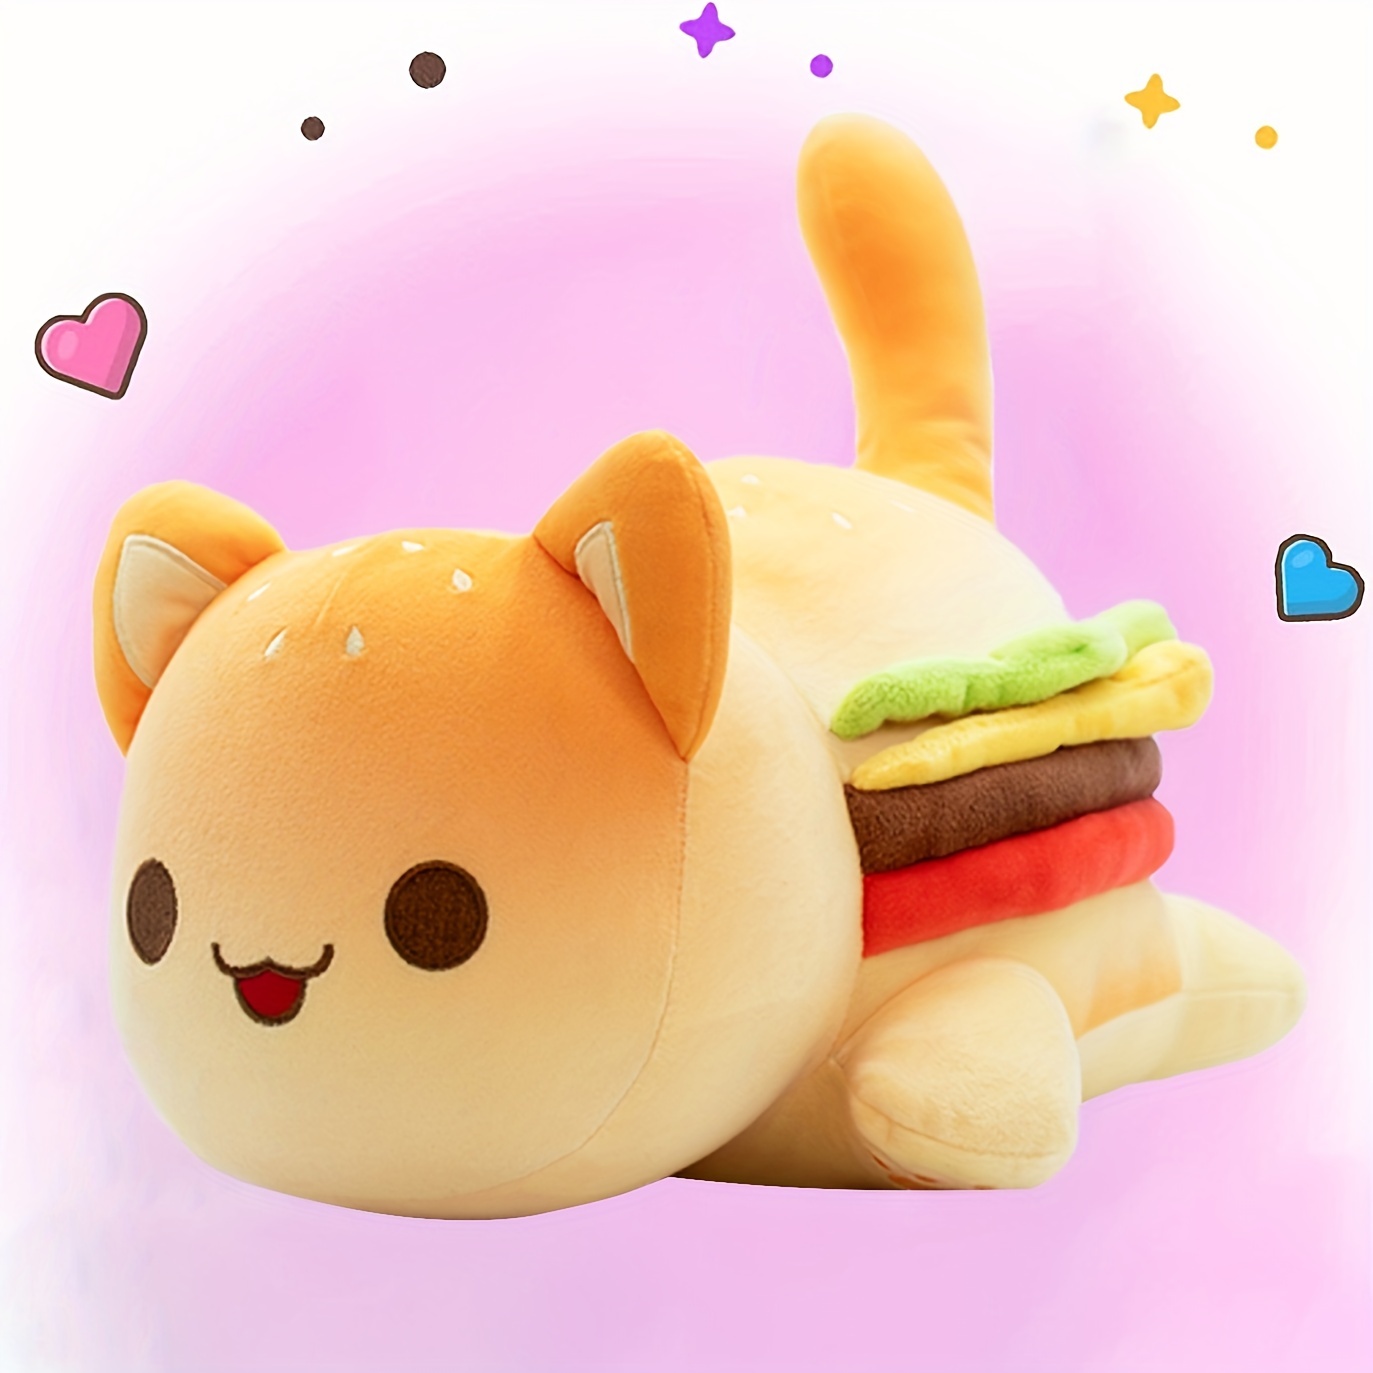 Premium Vector | Cute illustrator of double patty burger smiling kawaii  anime style